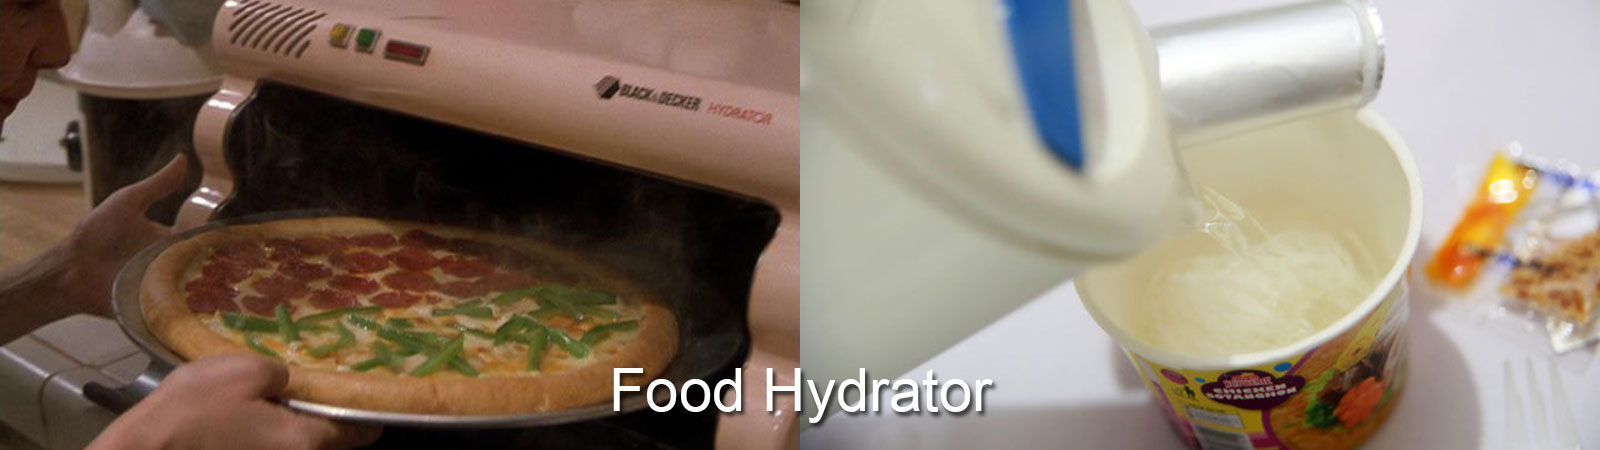 Black & Decker Hydrator